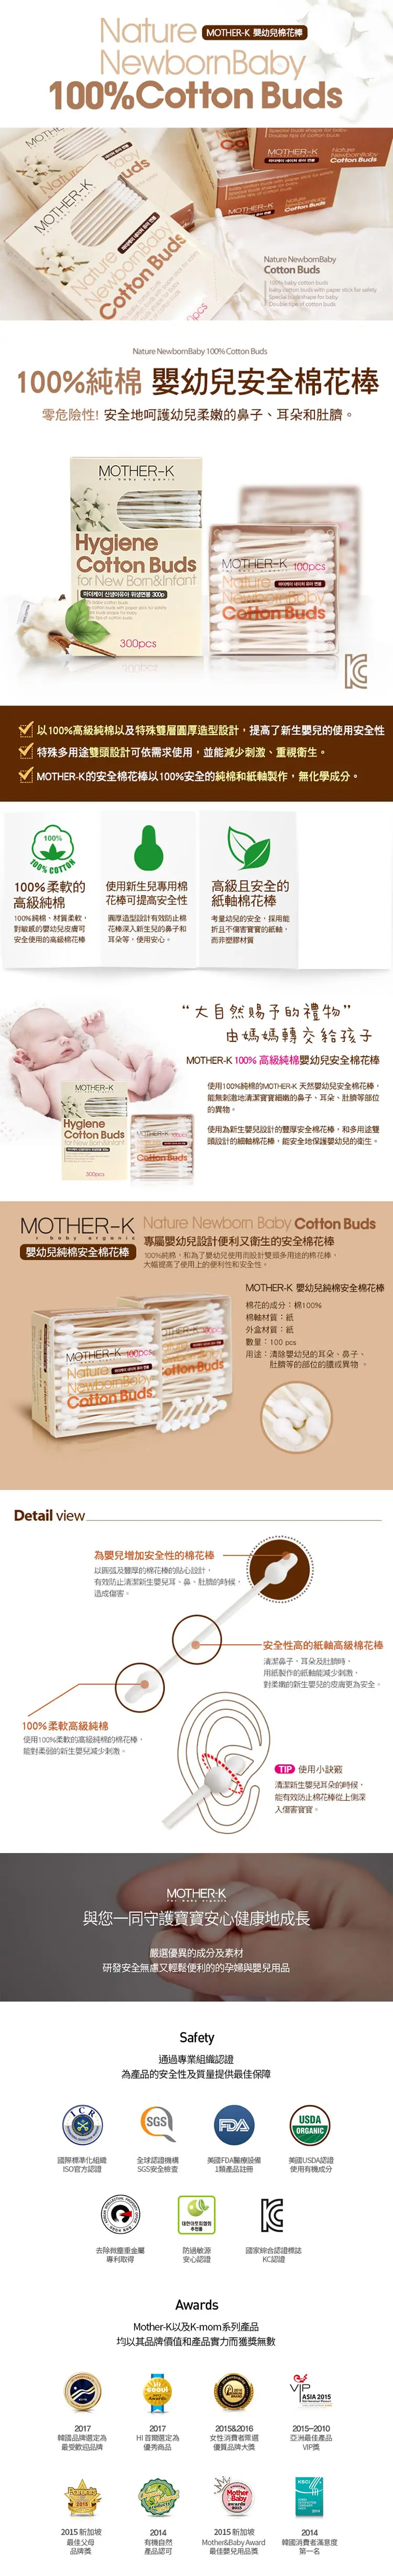 Mother-K 100%纯棉安全幼儿棉棒-100pcs